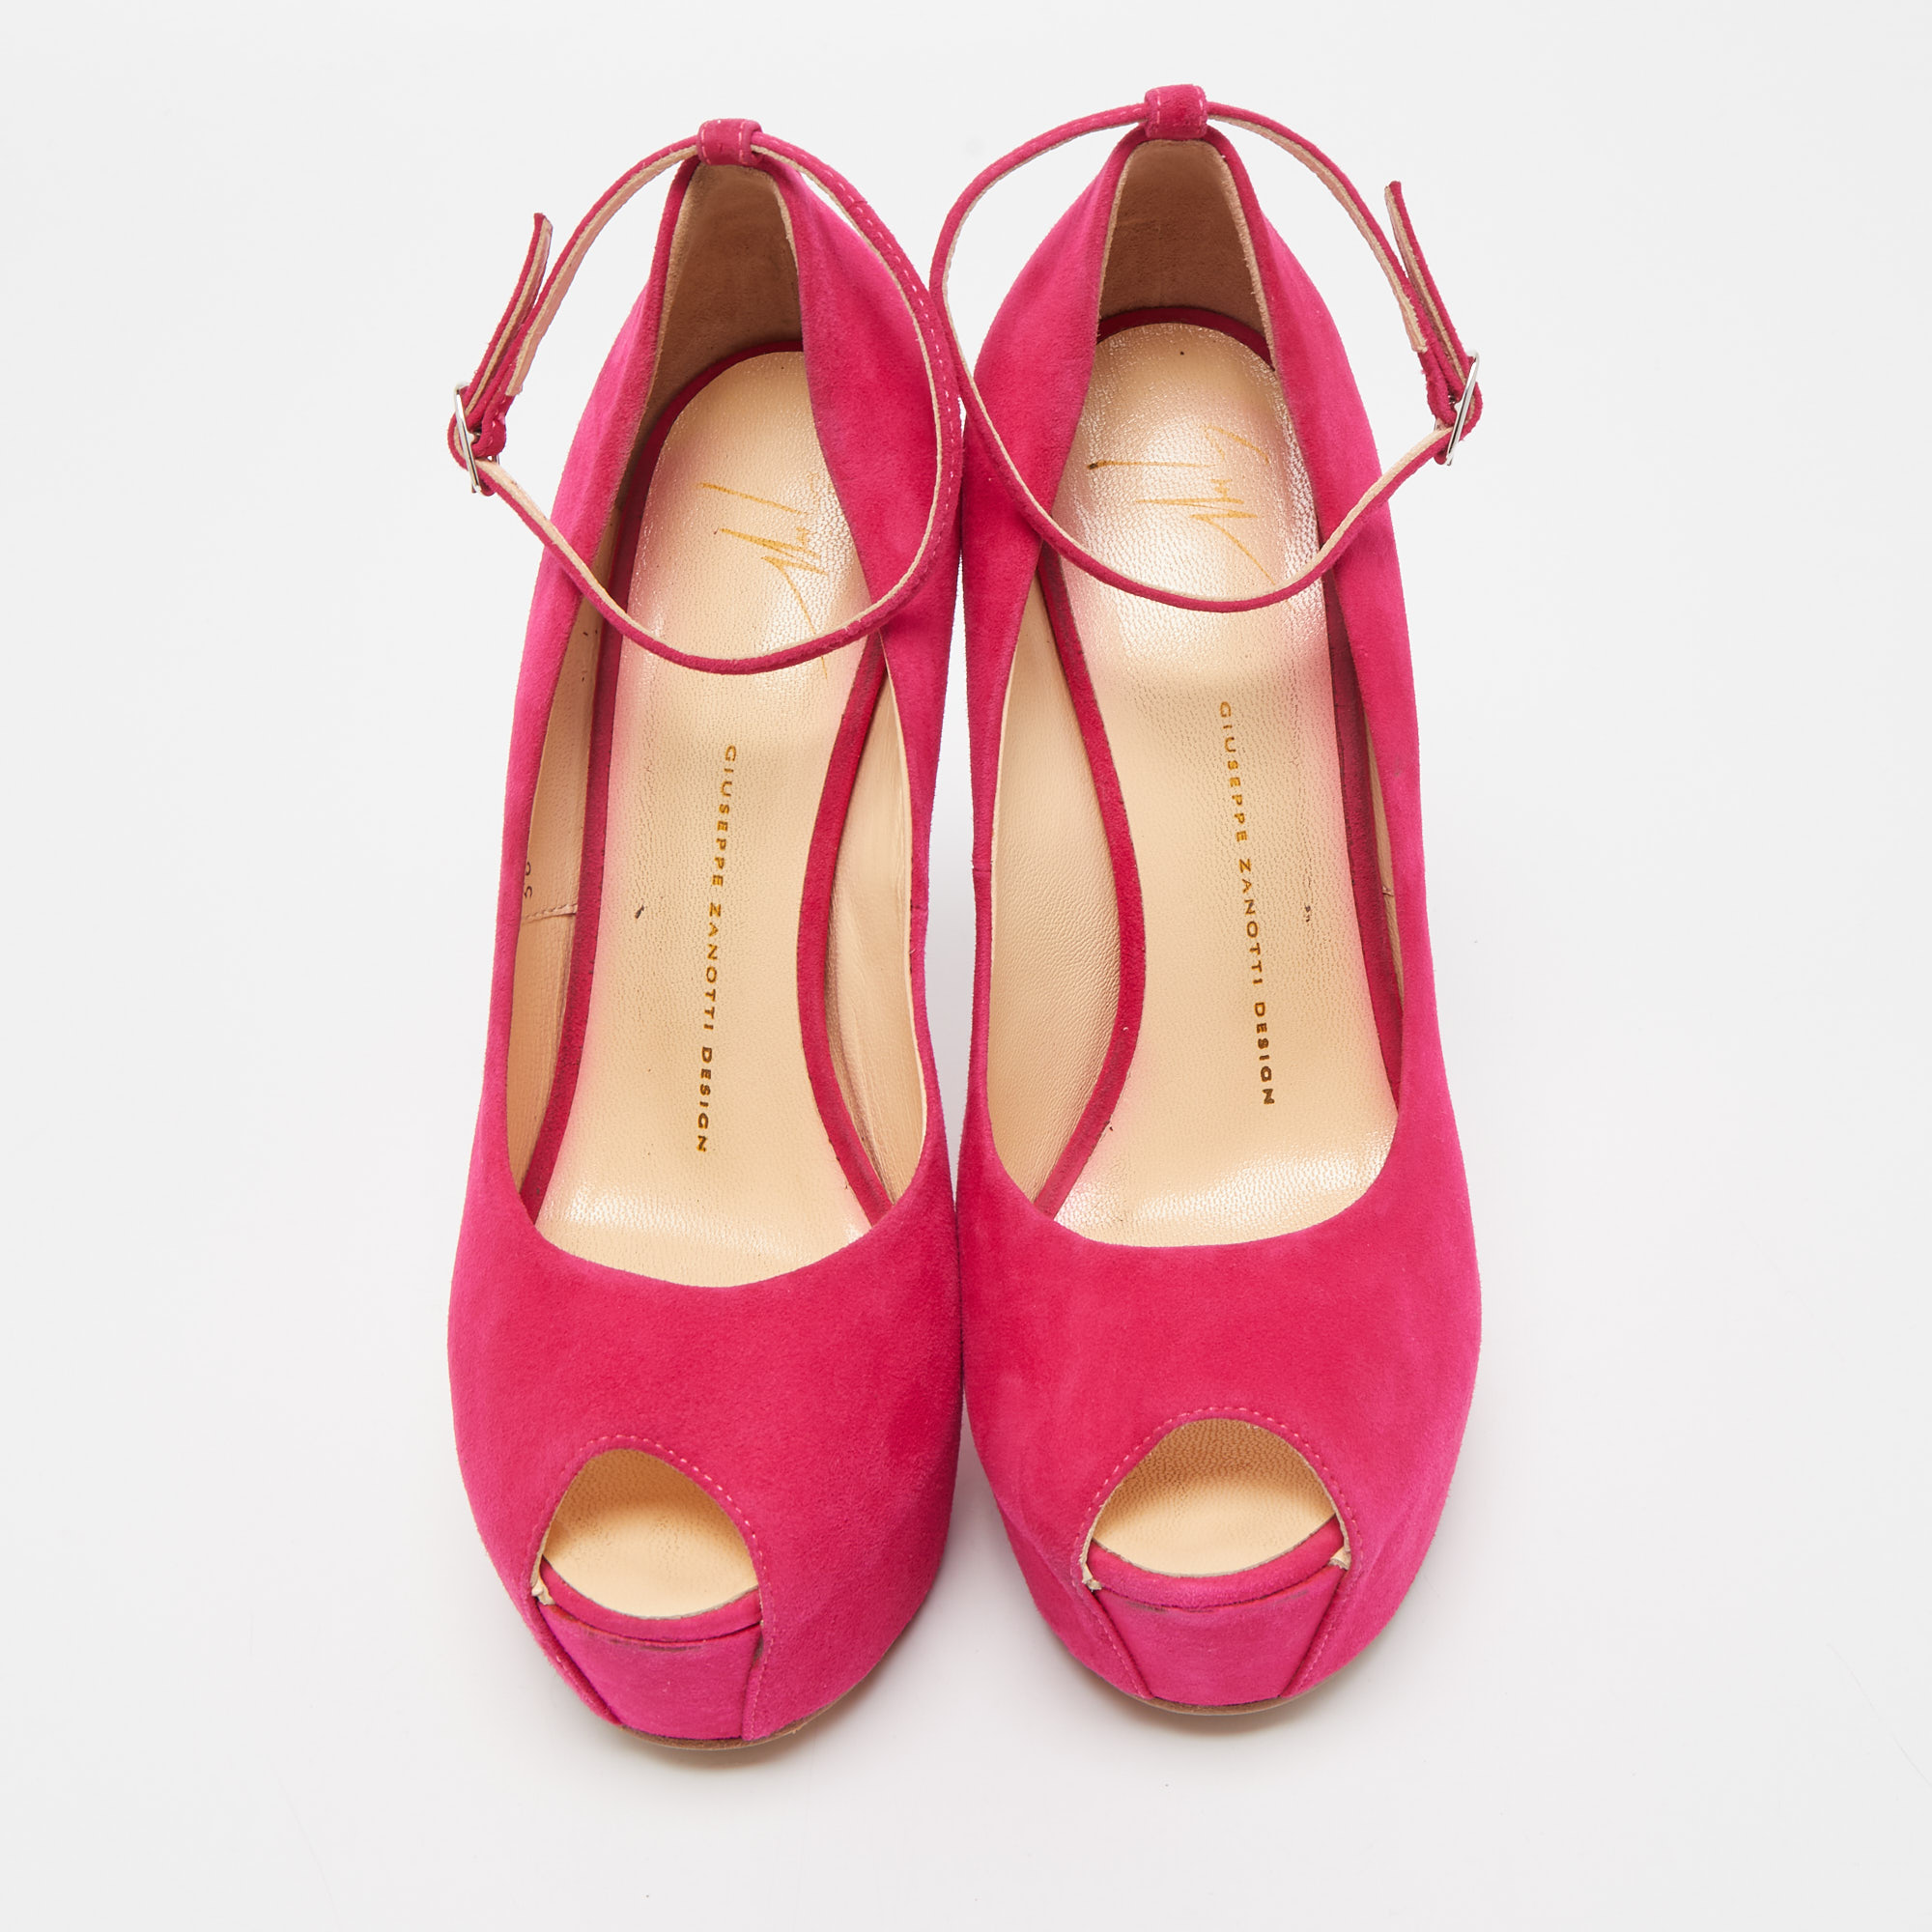 Giuseppe Zanotti Pink Suede Peep Toe Platform Heel Less Ankle Strap Pumps Size 39.5